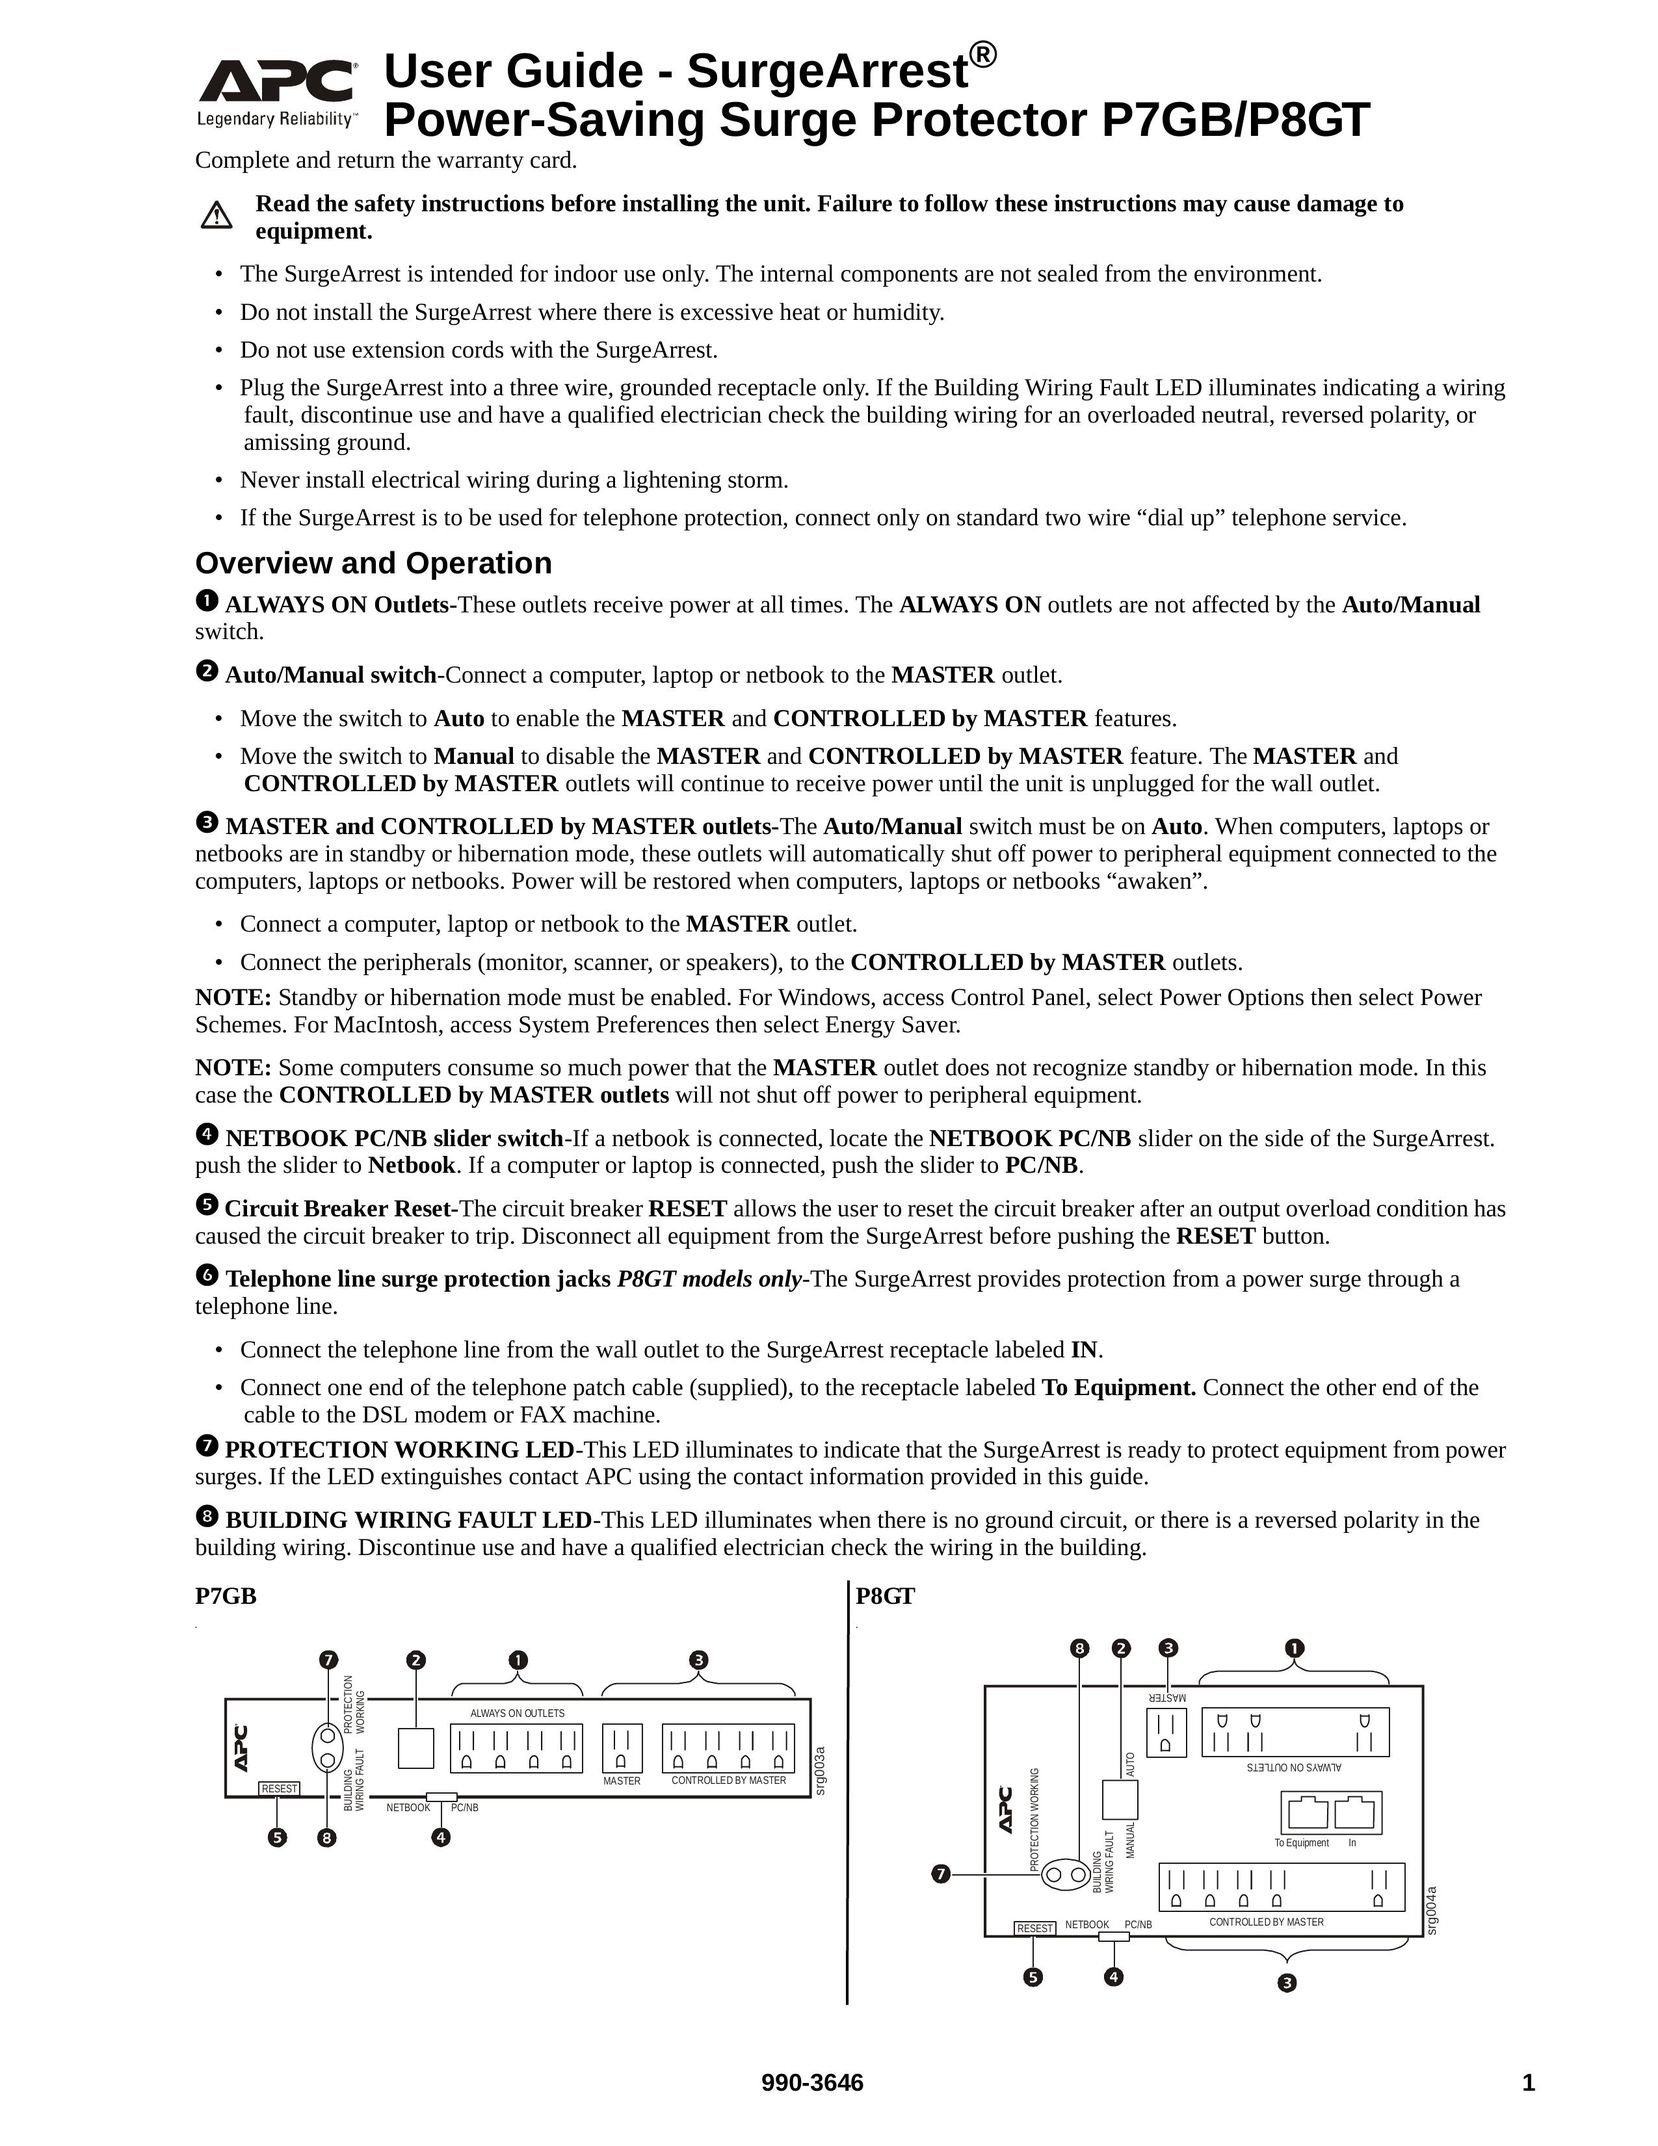 APC 1990-3646 Surge Protector User Manual